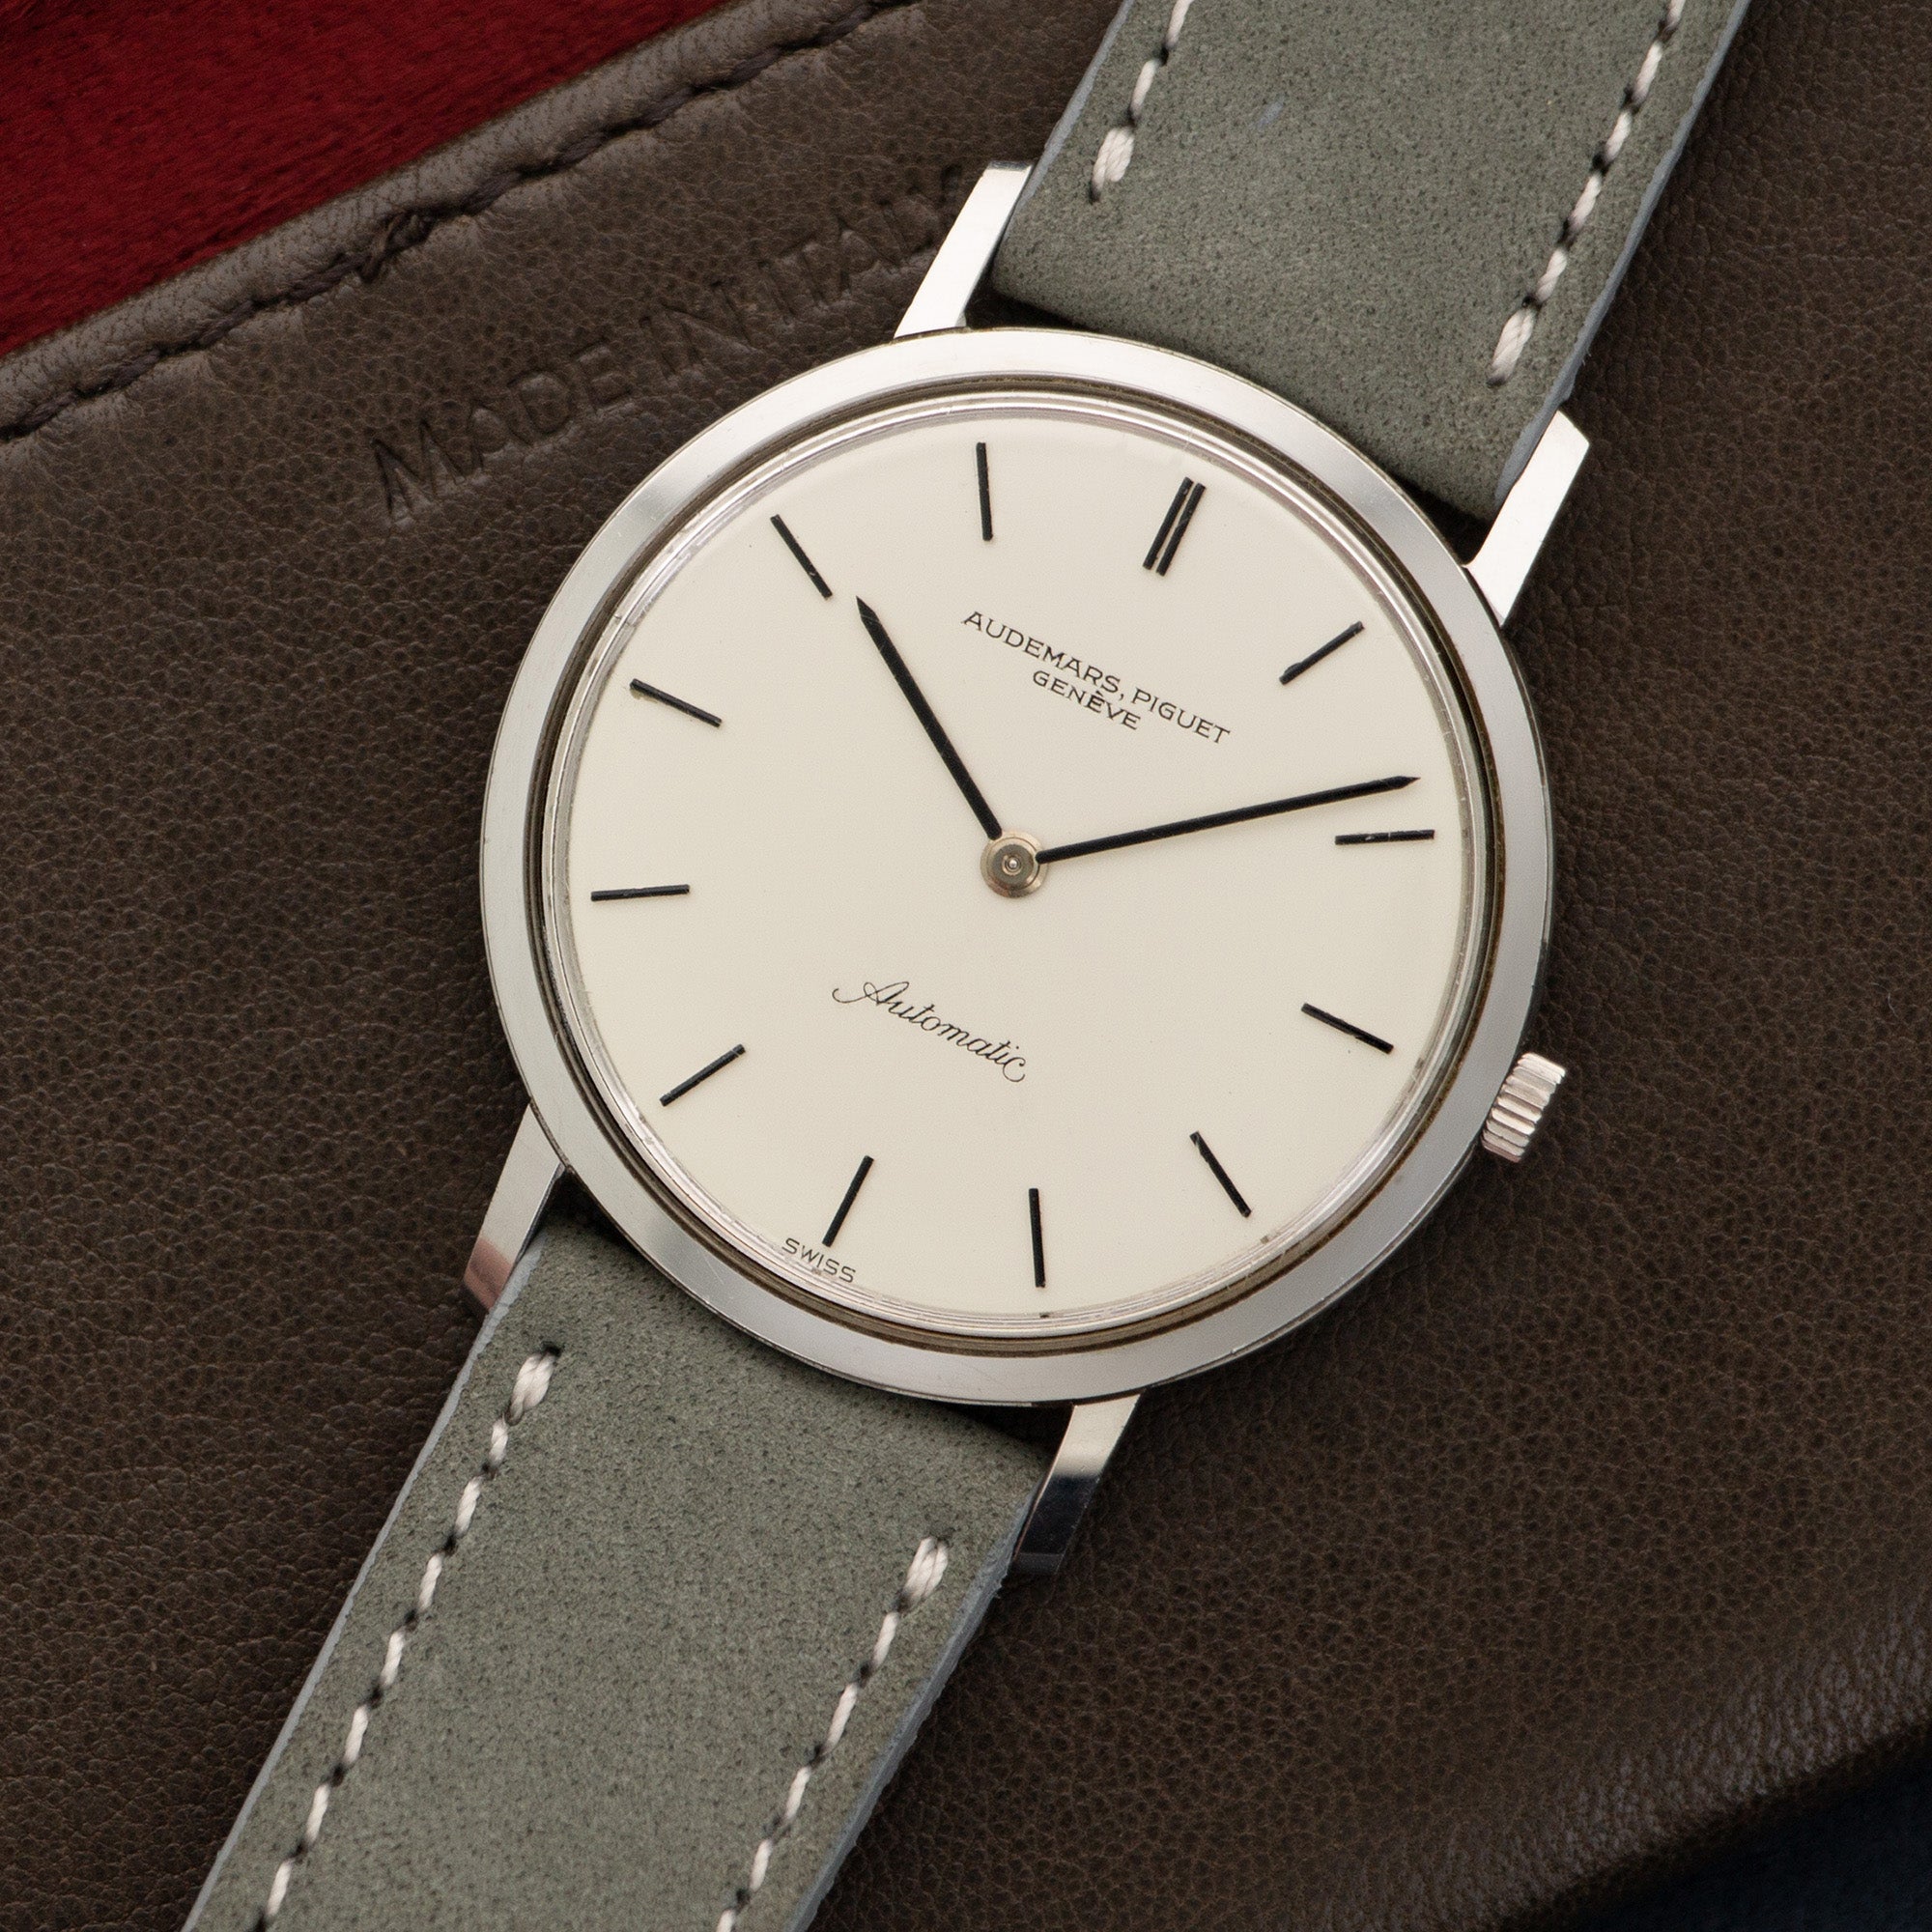 Audemars Piguet - Audemars Piguet Steel Automatic Ultra-Slim Watch Ref. 5273 - The Keystone Watches